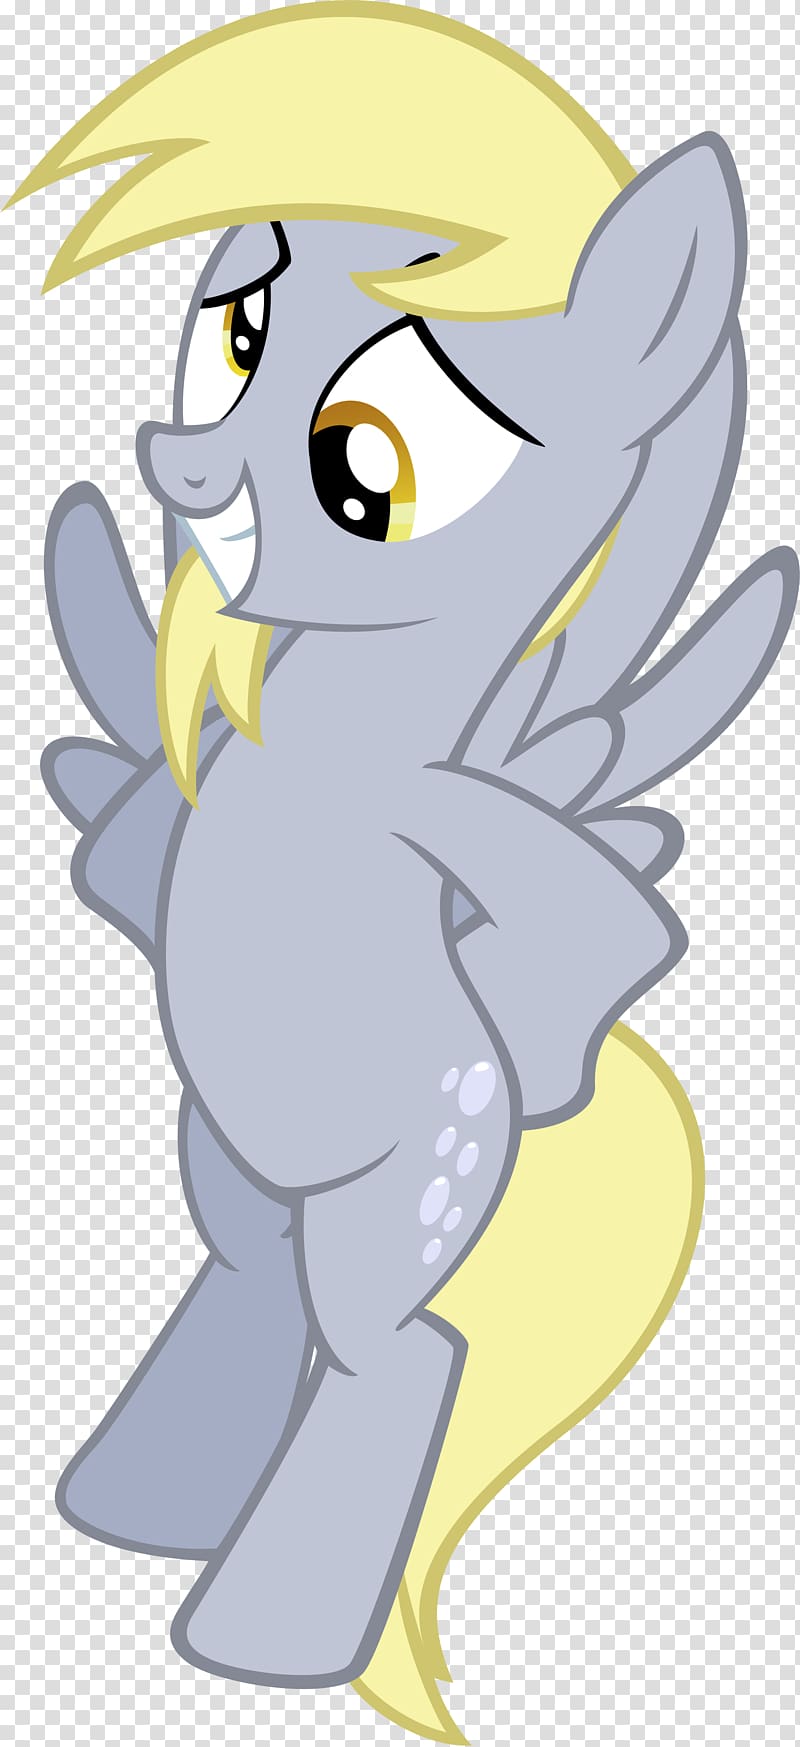 Derpy Hooves Pony Princess Luna Princess Celestia Horse, others transparent background PNG clipart